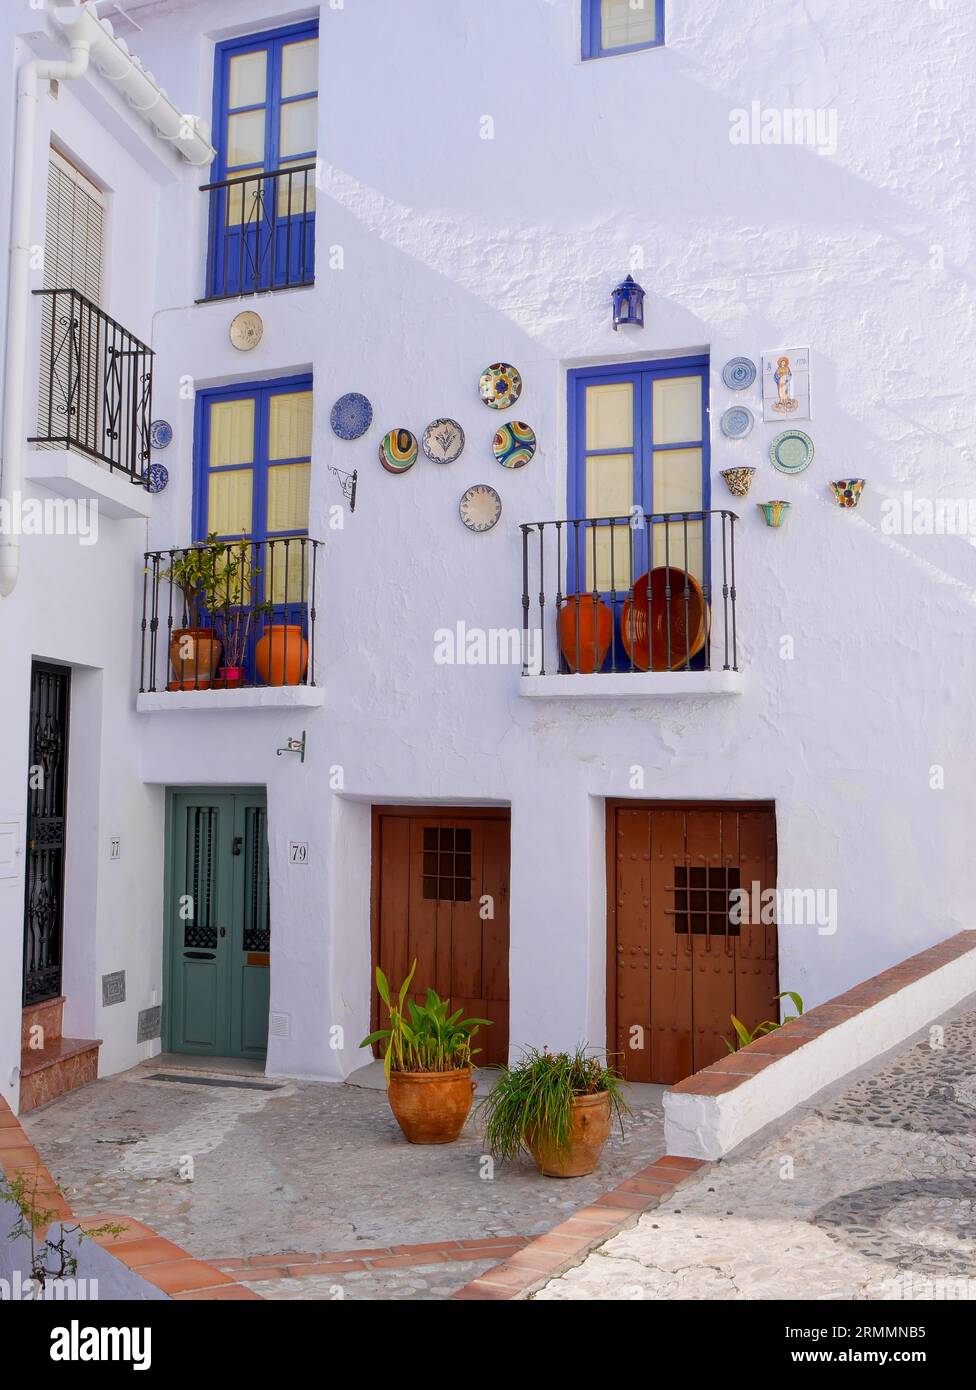 Frigiliana, Three Story House Decorated with Spanish Pottery and Plates, Nerja, Malaga Province, Andalusia, Spain. Stock Photo